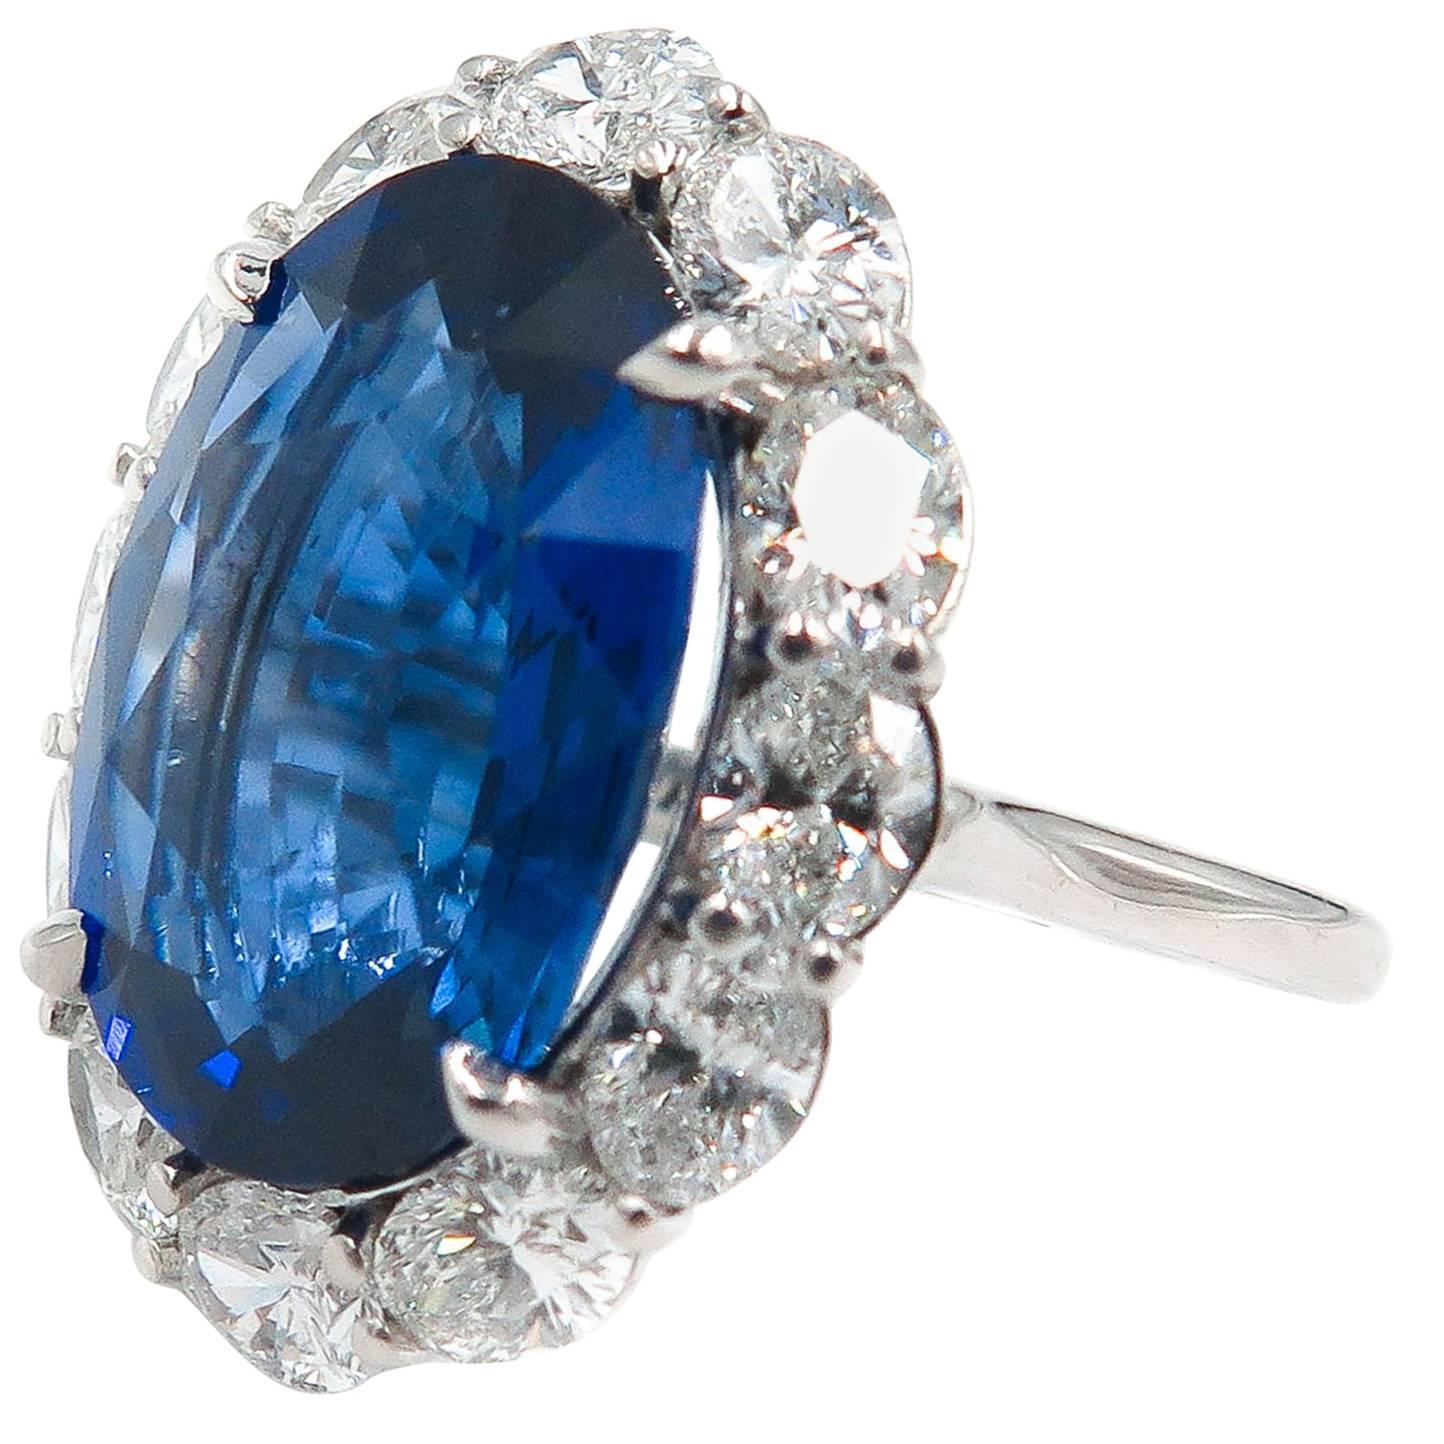 11.62 Carat Oval Sapphire Diamond Cocktail Ring